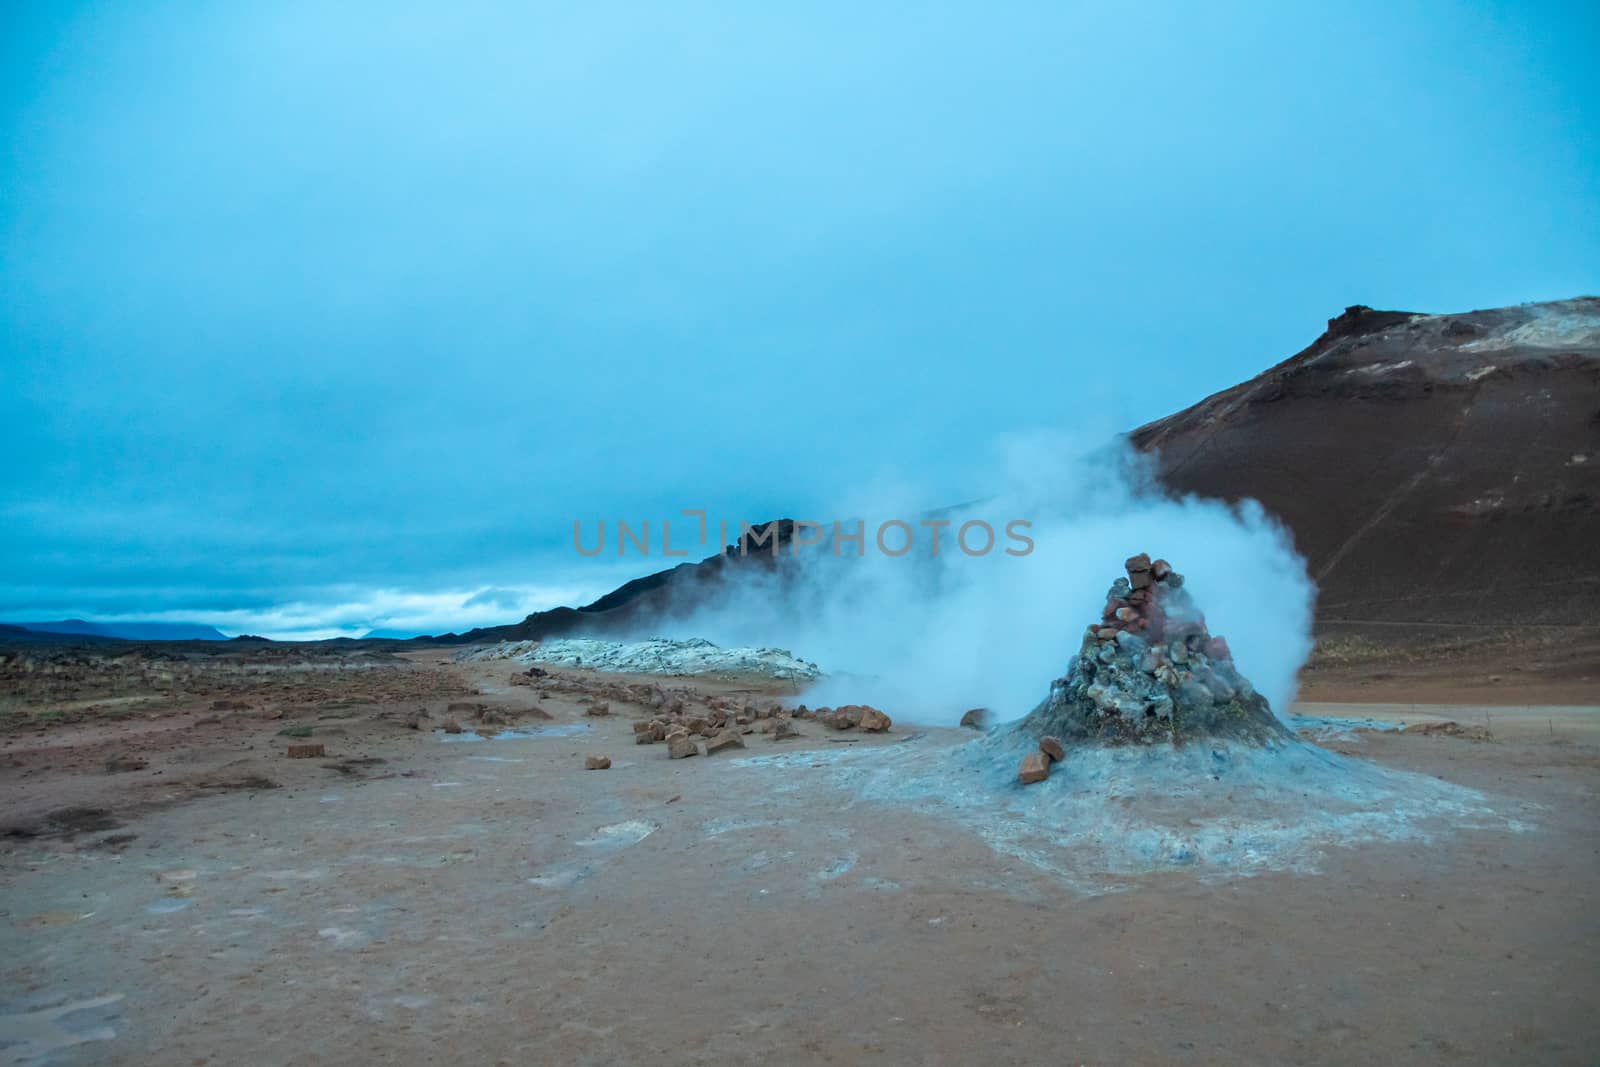 Hverir volcano in Iceland sulfuric smoker emitting very hot steam